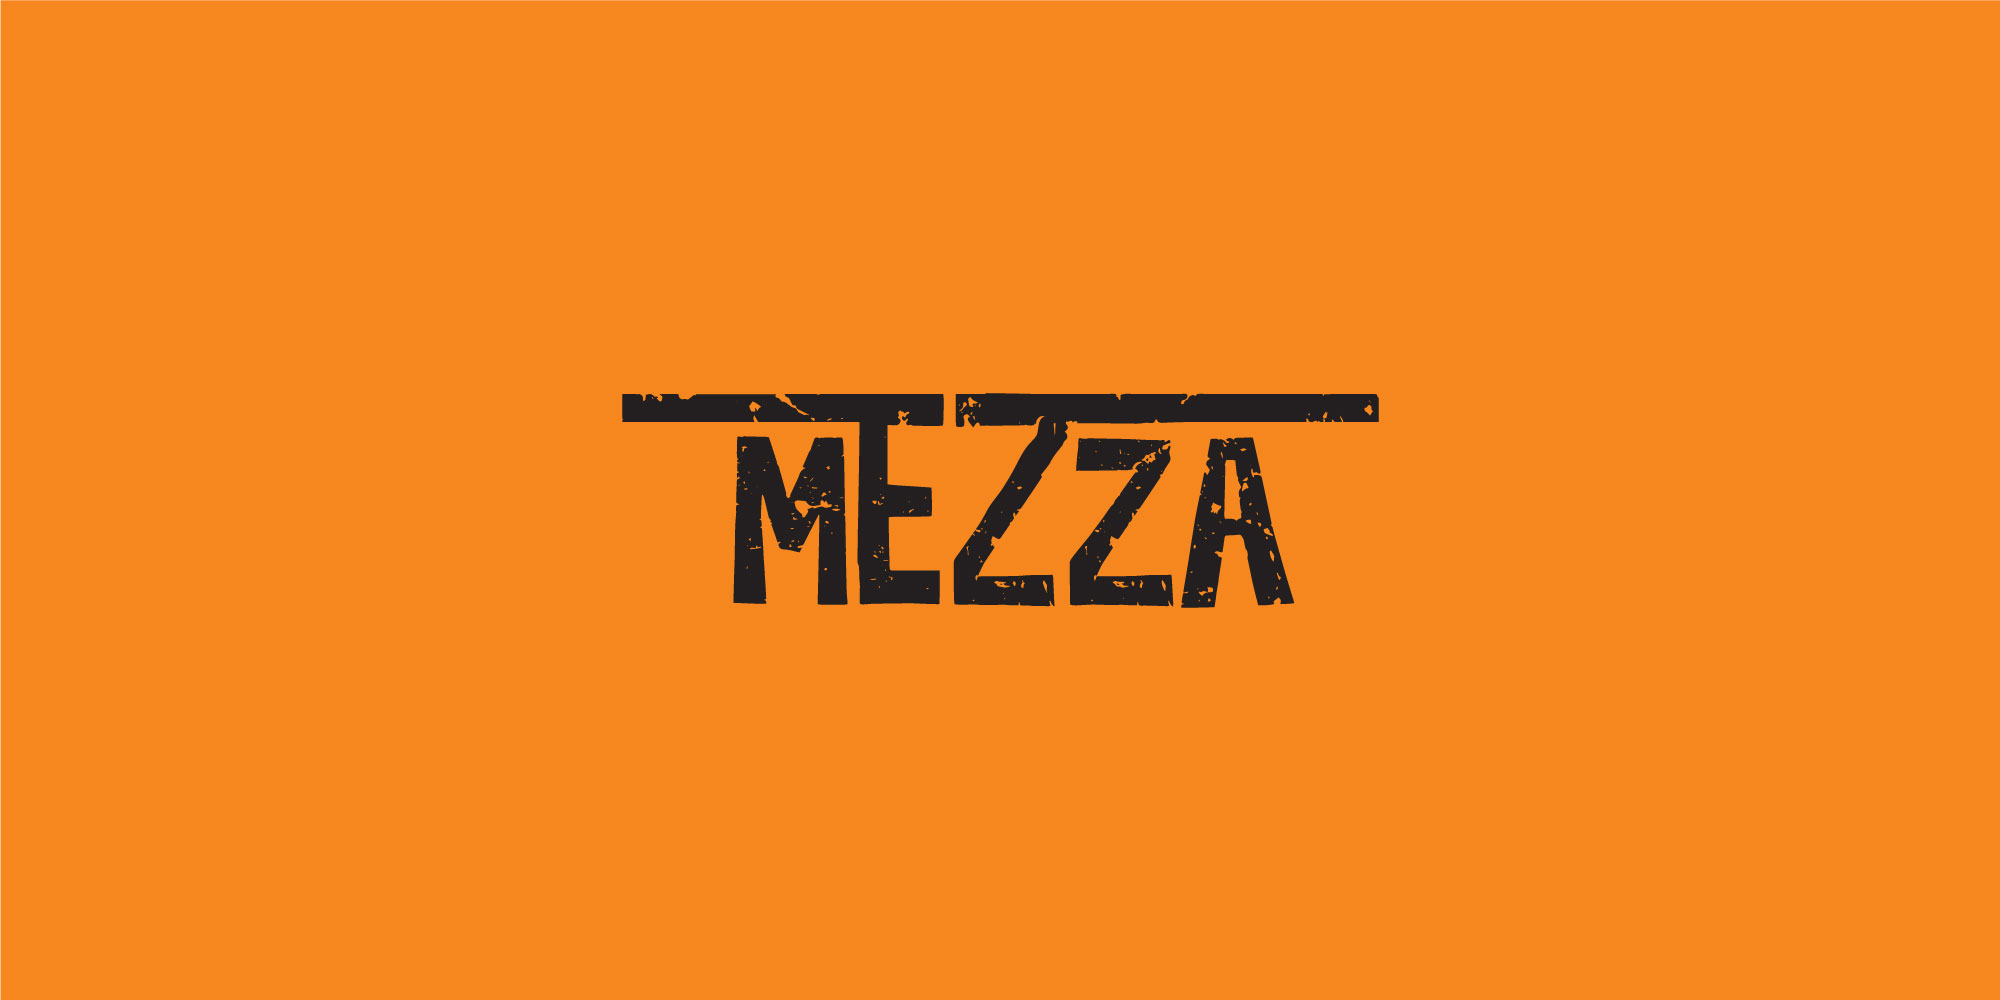 Mezza logo design 2 black logo on orange bg